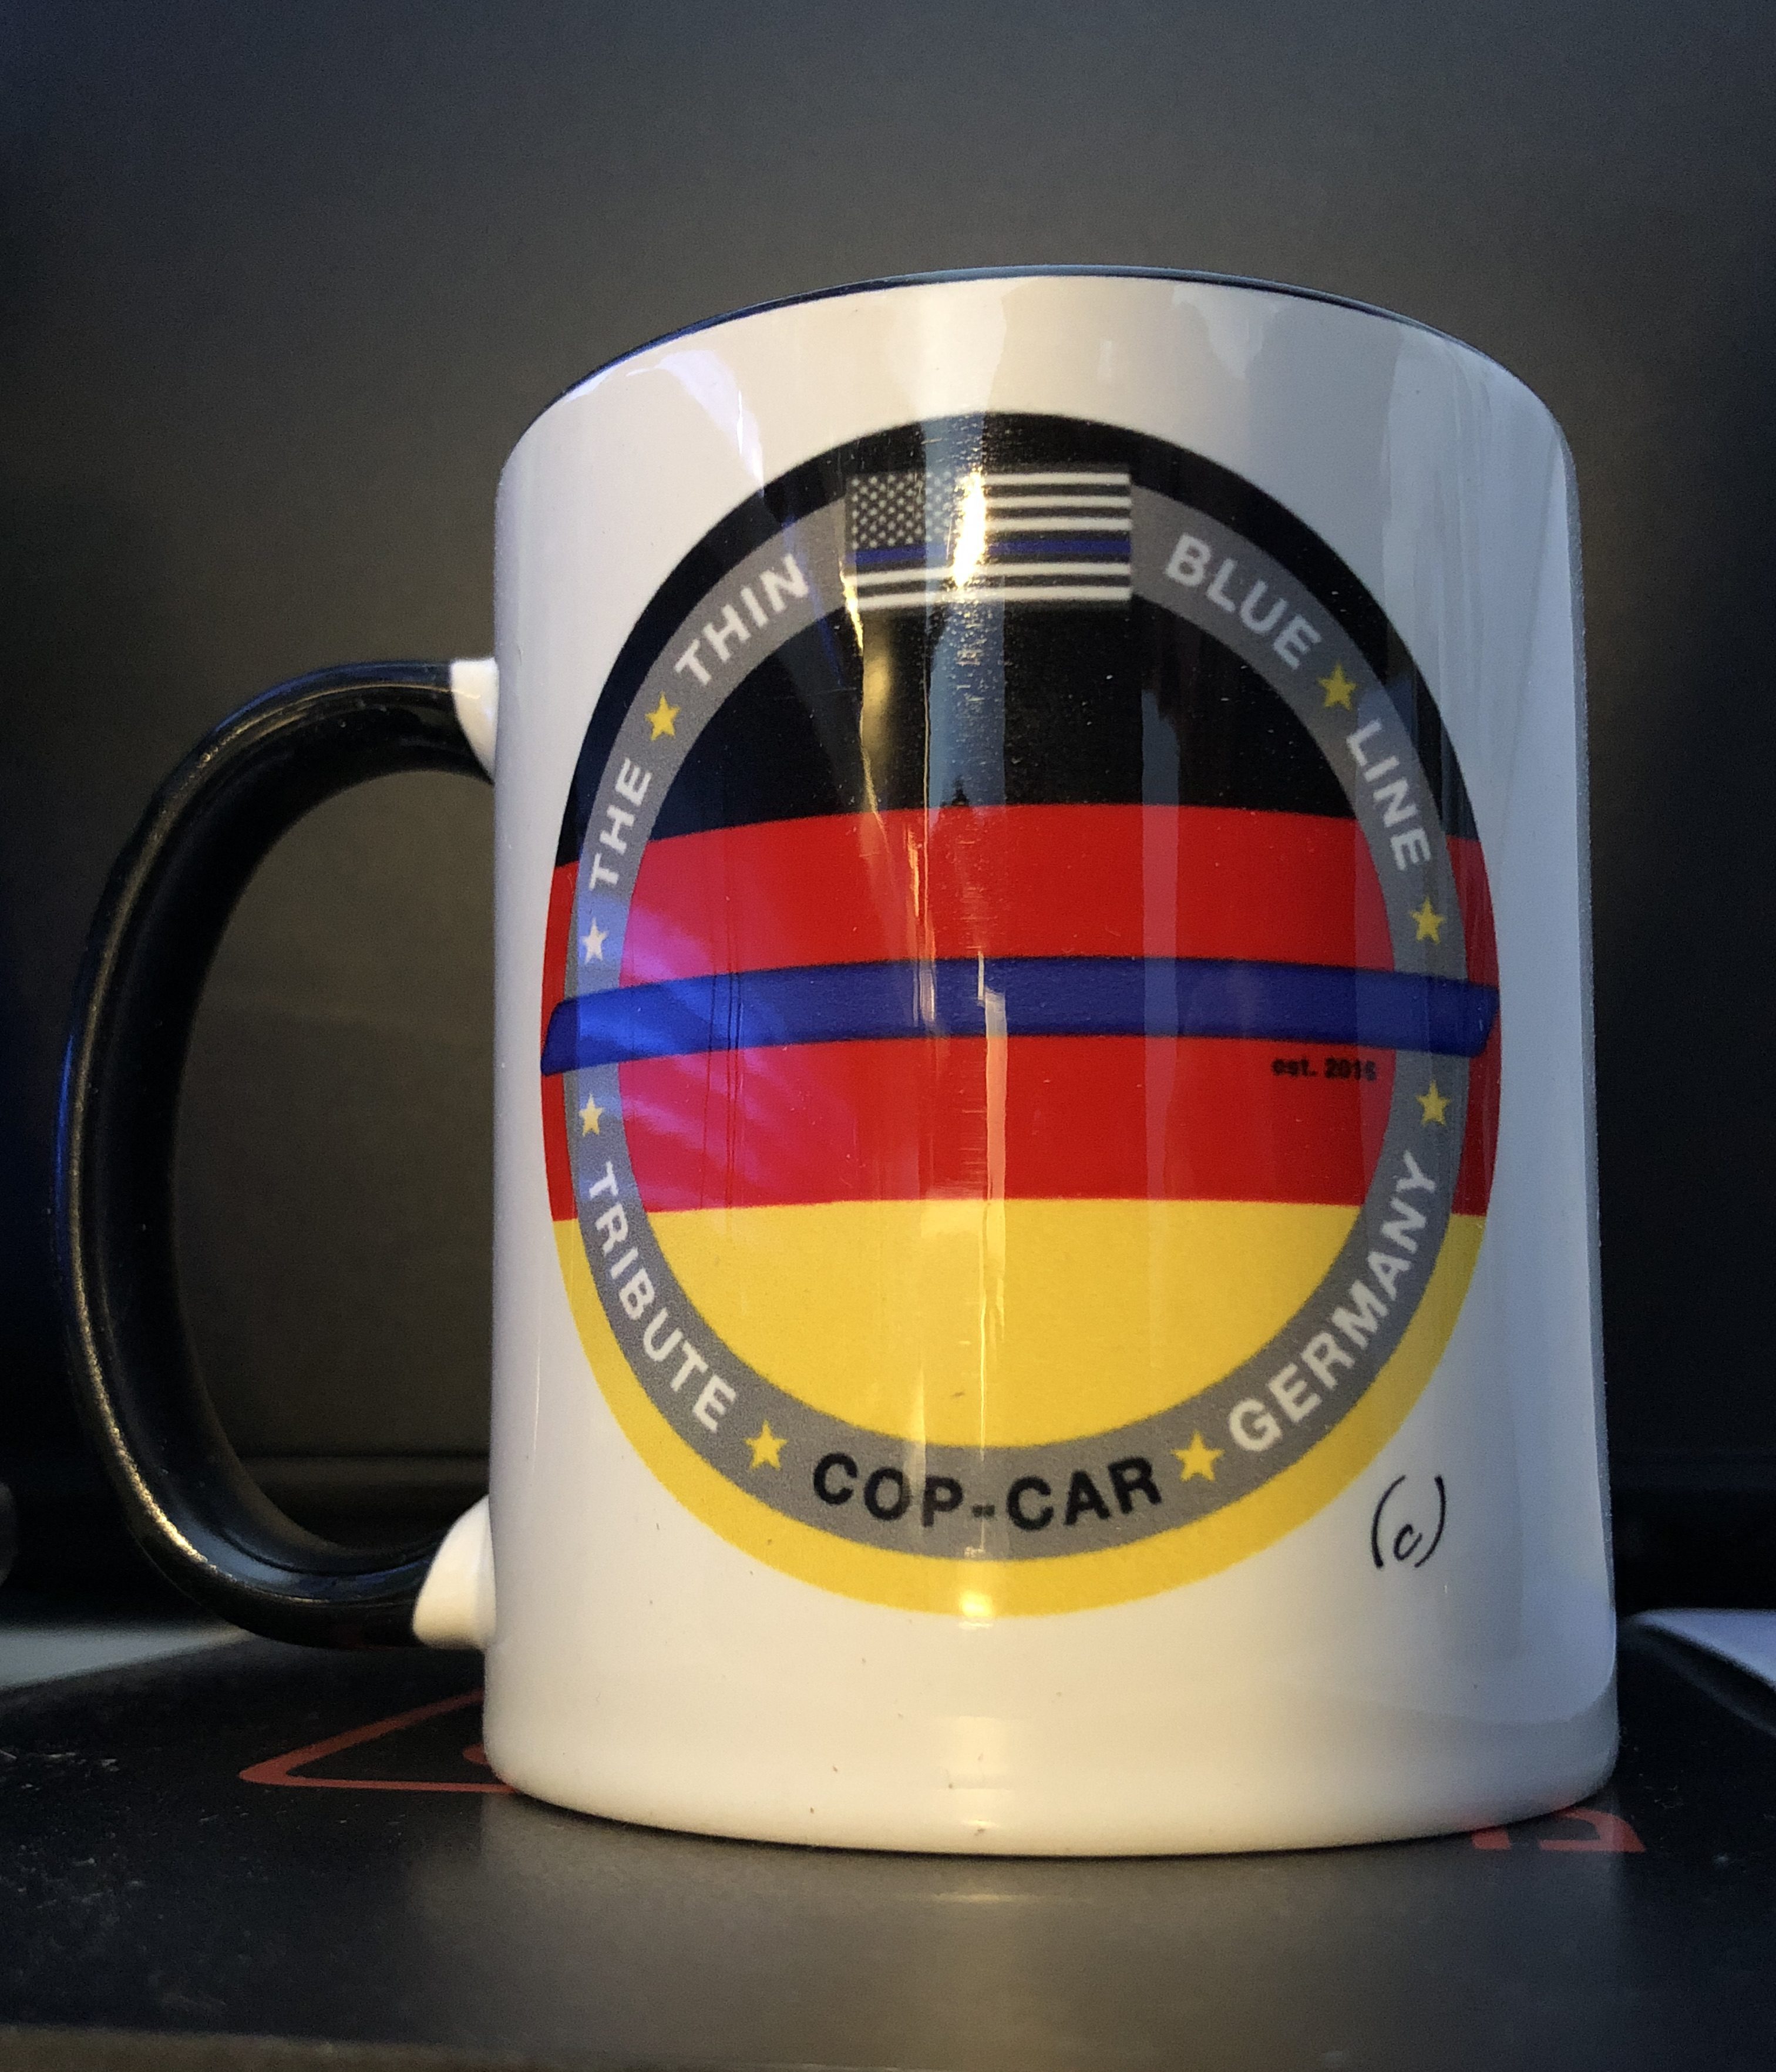 Coffee-mug/ Kaffeebecher "The Thin Blue Line tribute cop ...